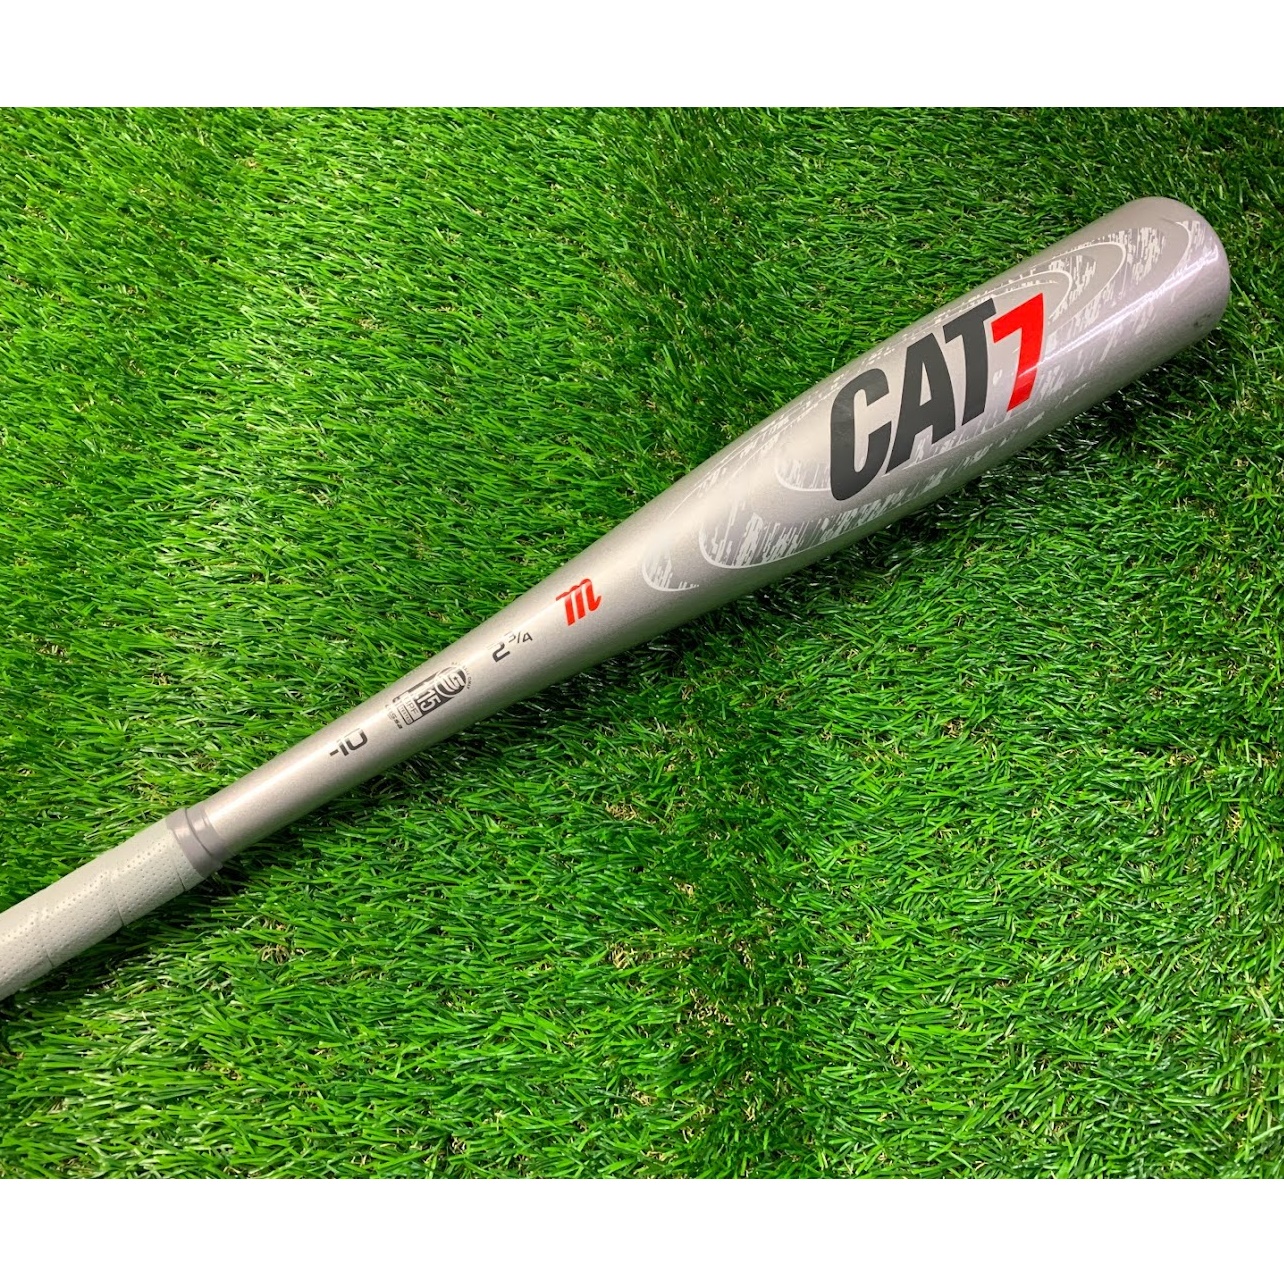 marucci-cat7-silver-10-baseball-bat-29-inch-19-oz-demo MSBC7210S-2919-DEMO Marucci  Demo bats are a great opportunity to pick up a high